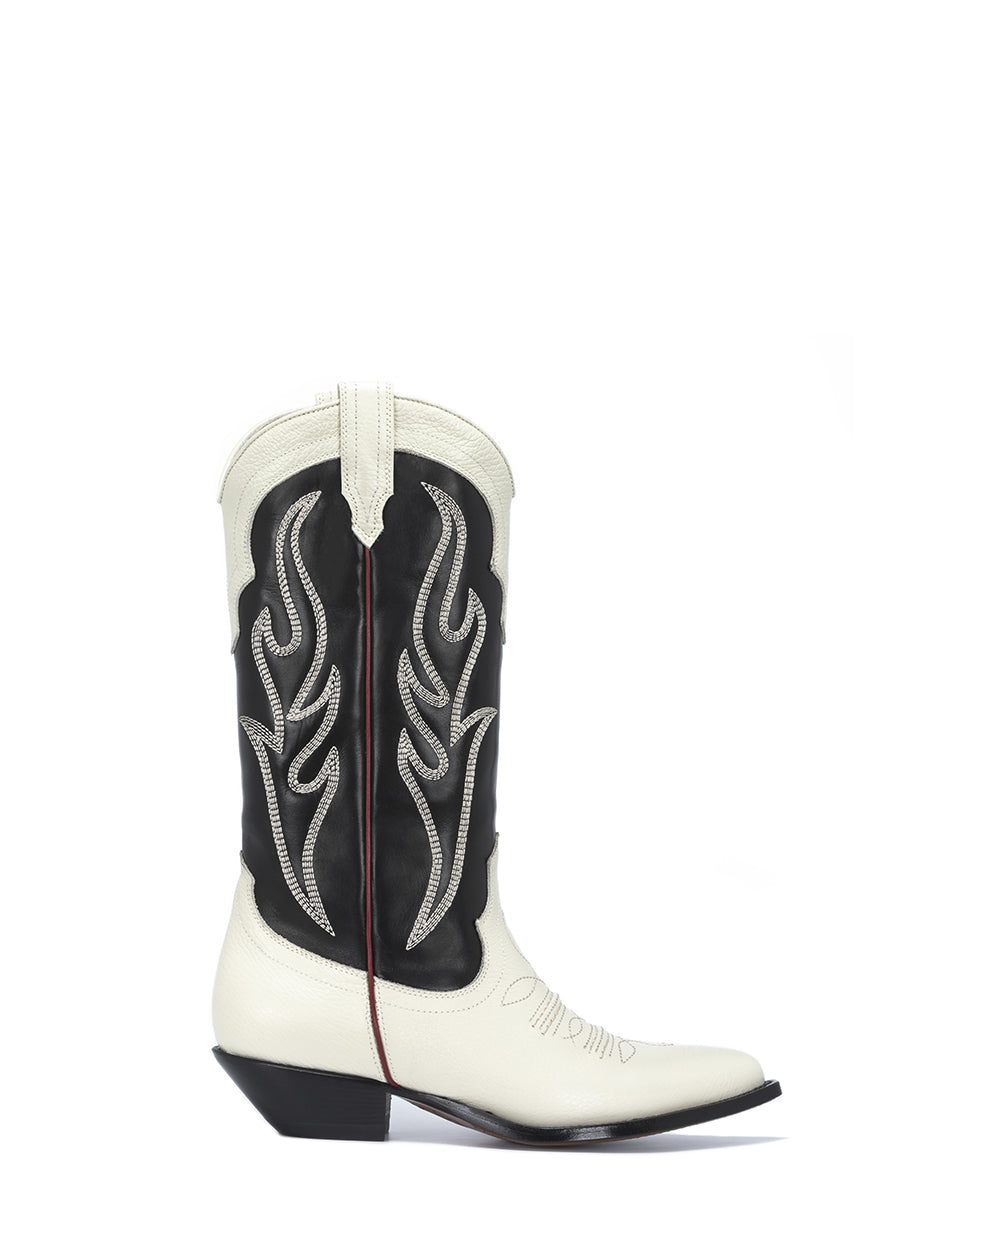 SANTA FE Women's Cowboy Boots in Black & White Vacchetta | Ecru Embroidery